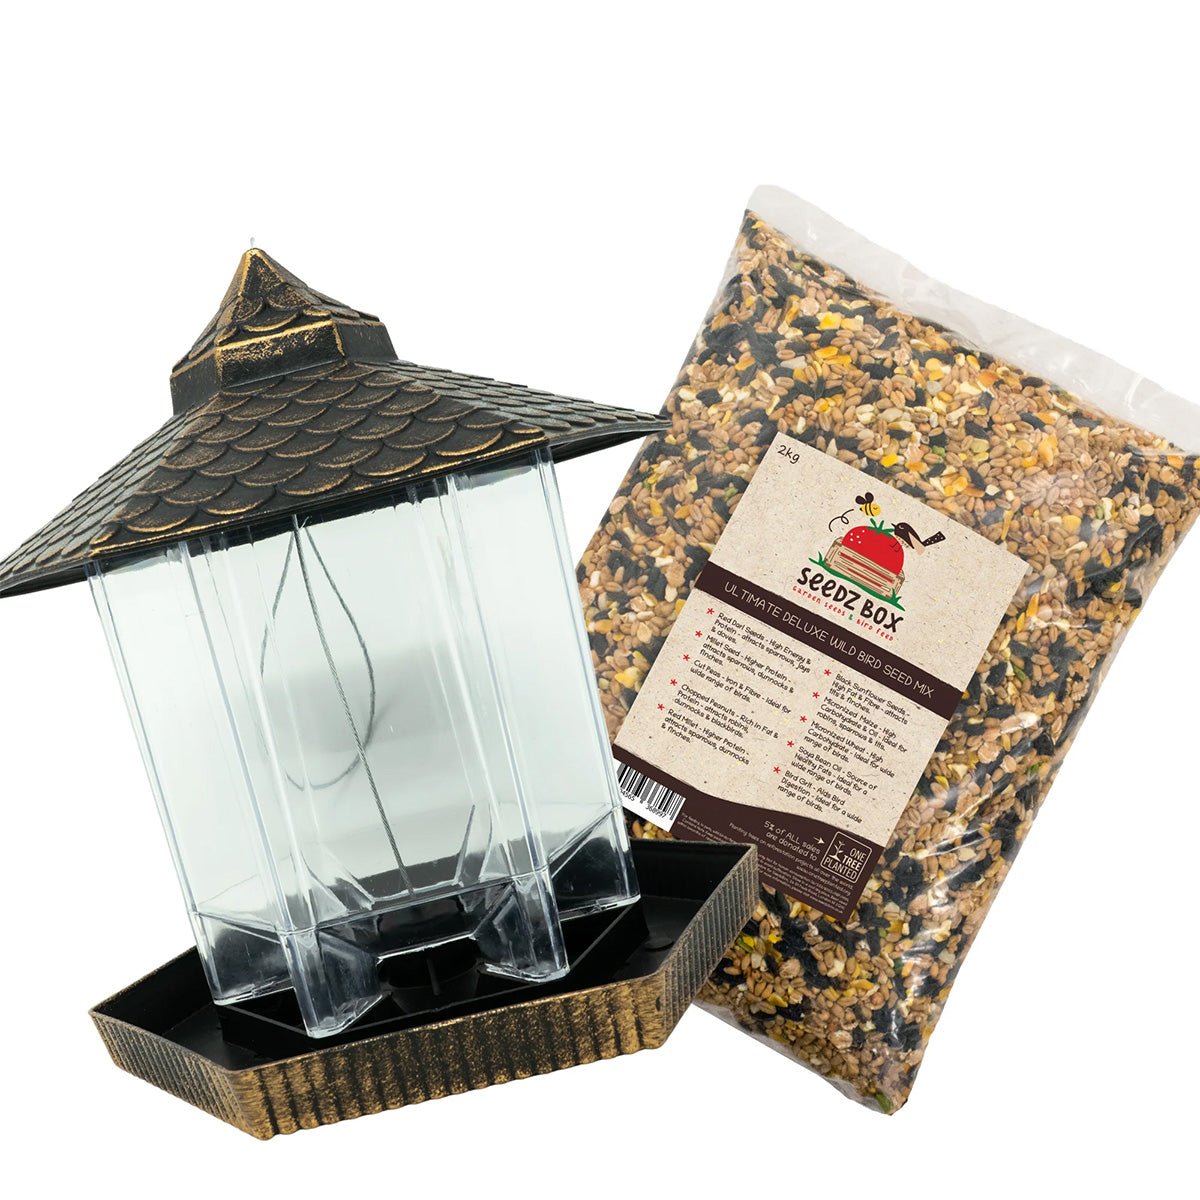 Bird Gazebo & seeds mix bundle (packed with mealworms & suet pellets) - Seedzbox10046700086109